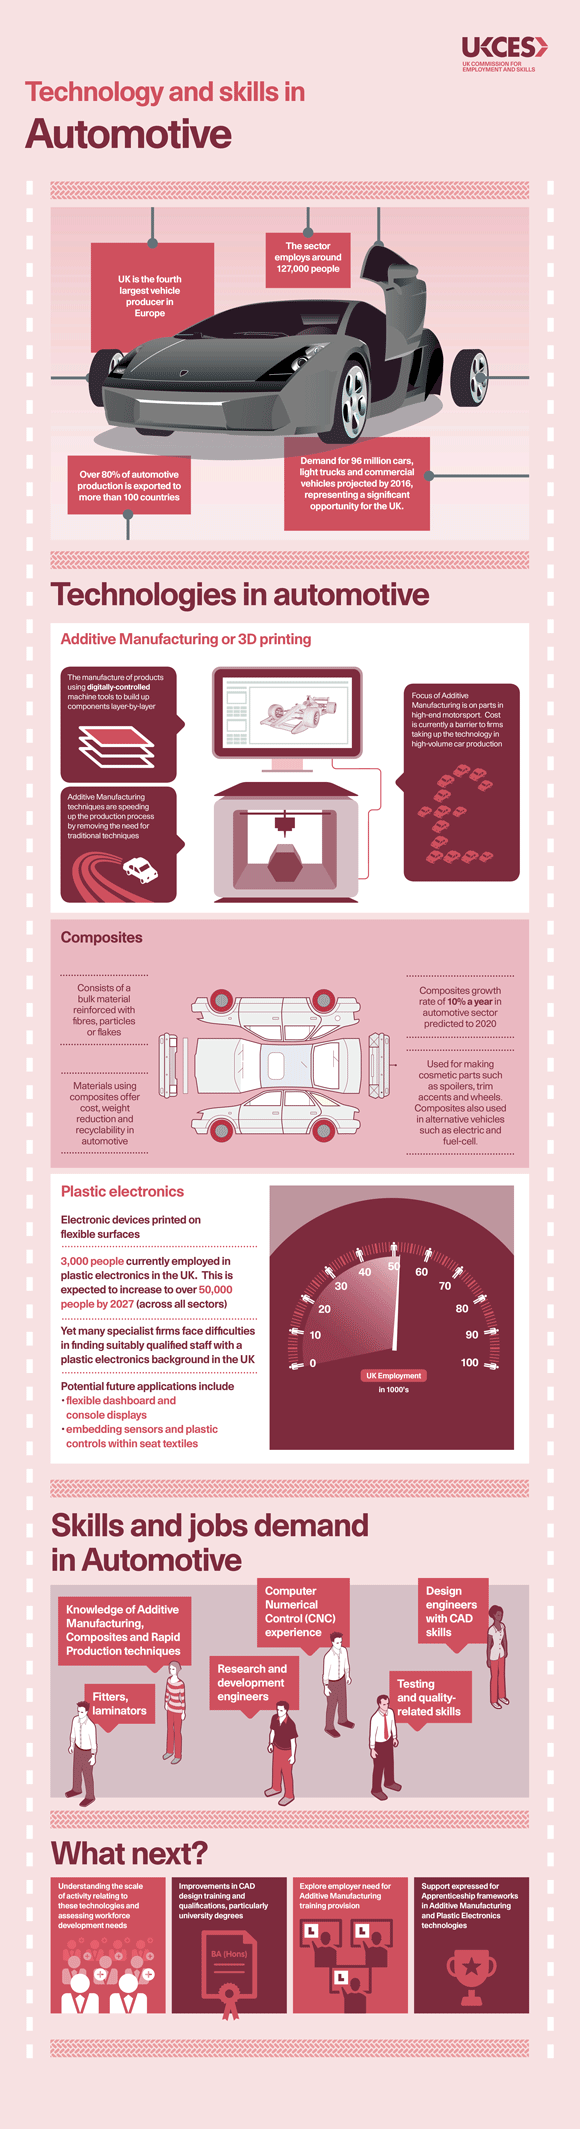 UKCES_Automotive_Infographic_v6